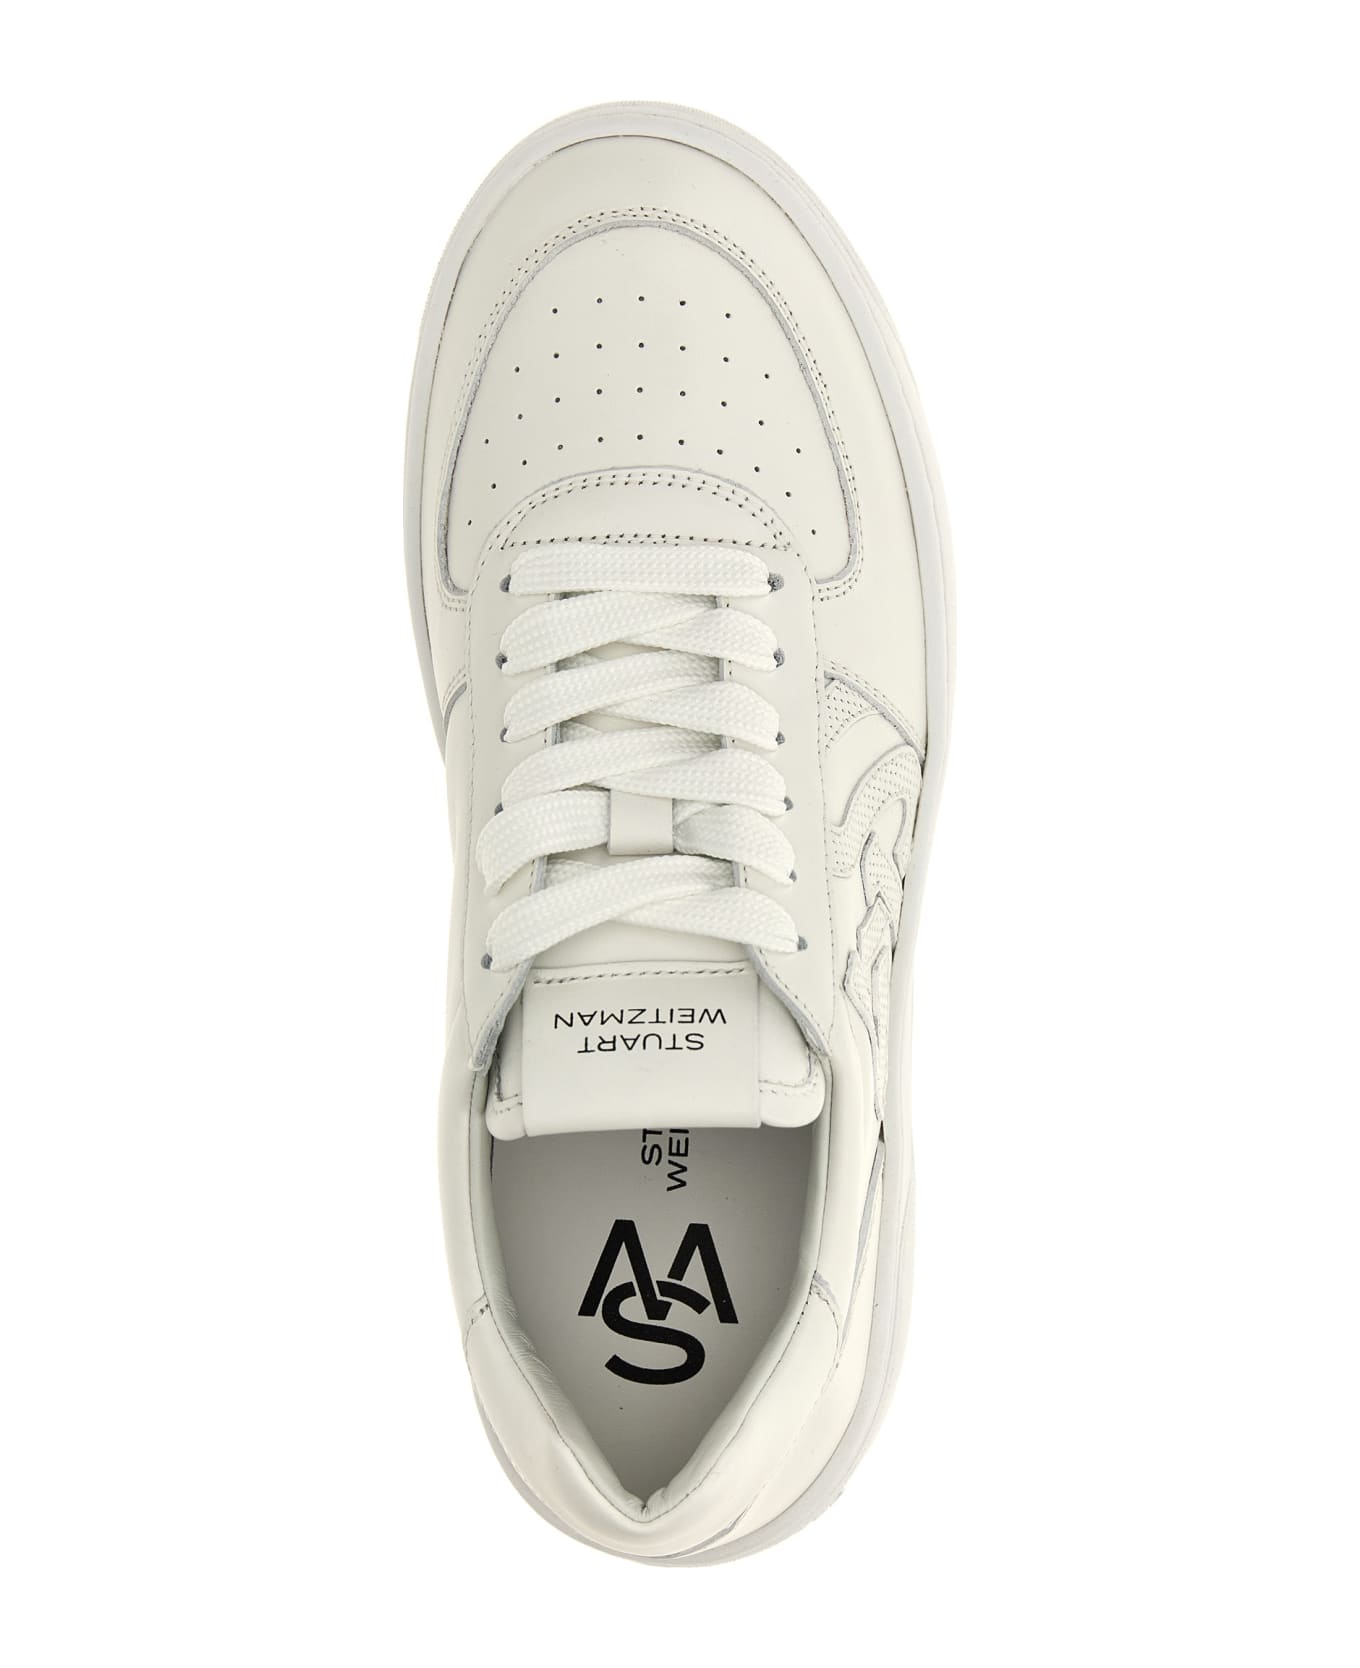 Stuart Weitzman 'courtside Monogram' Sneakers - White スニーカー